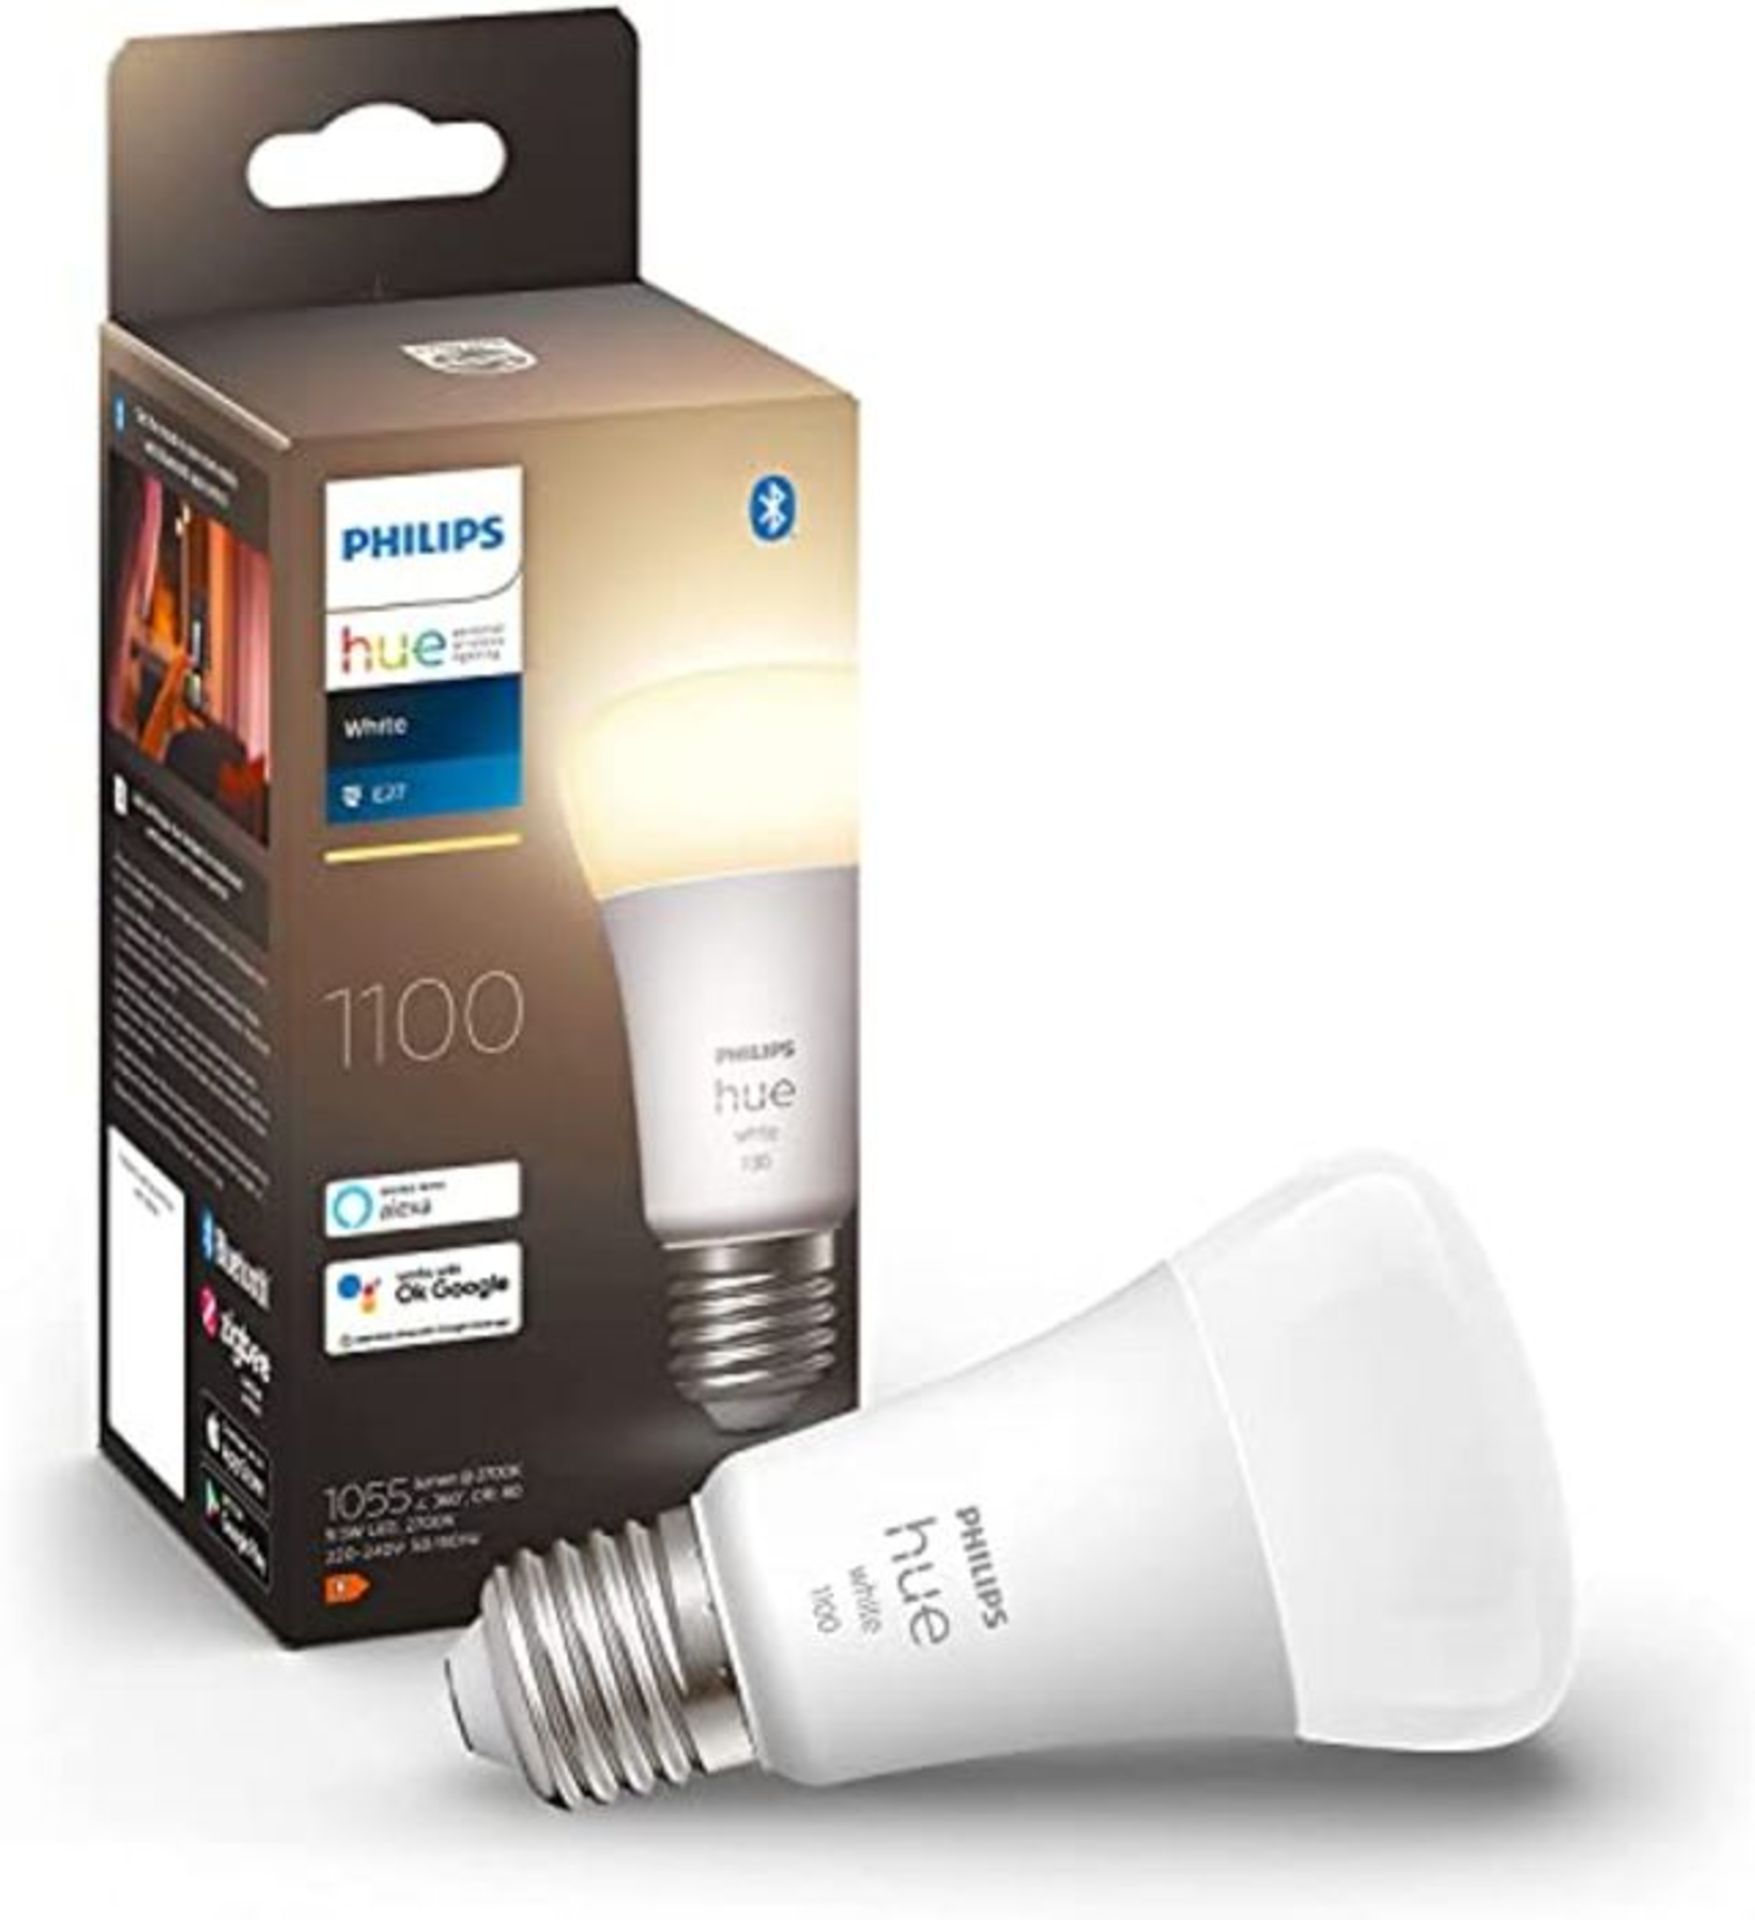 Philips Hue NEW White Smart Light Bulb 75W - 1100 Lumen [E27 Edison Screw] With Blueto